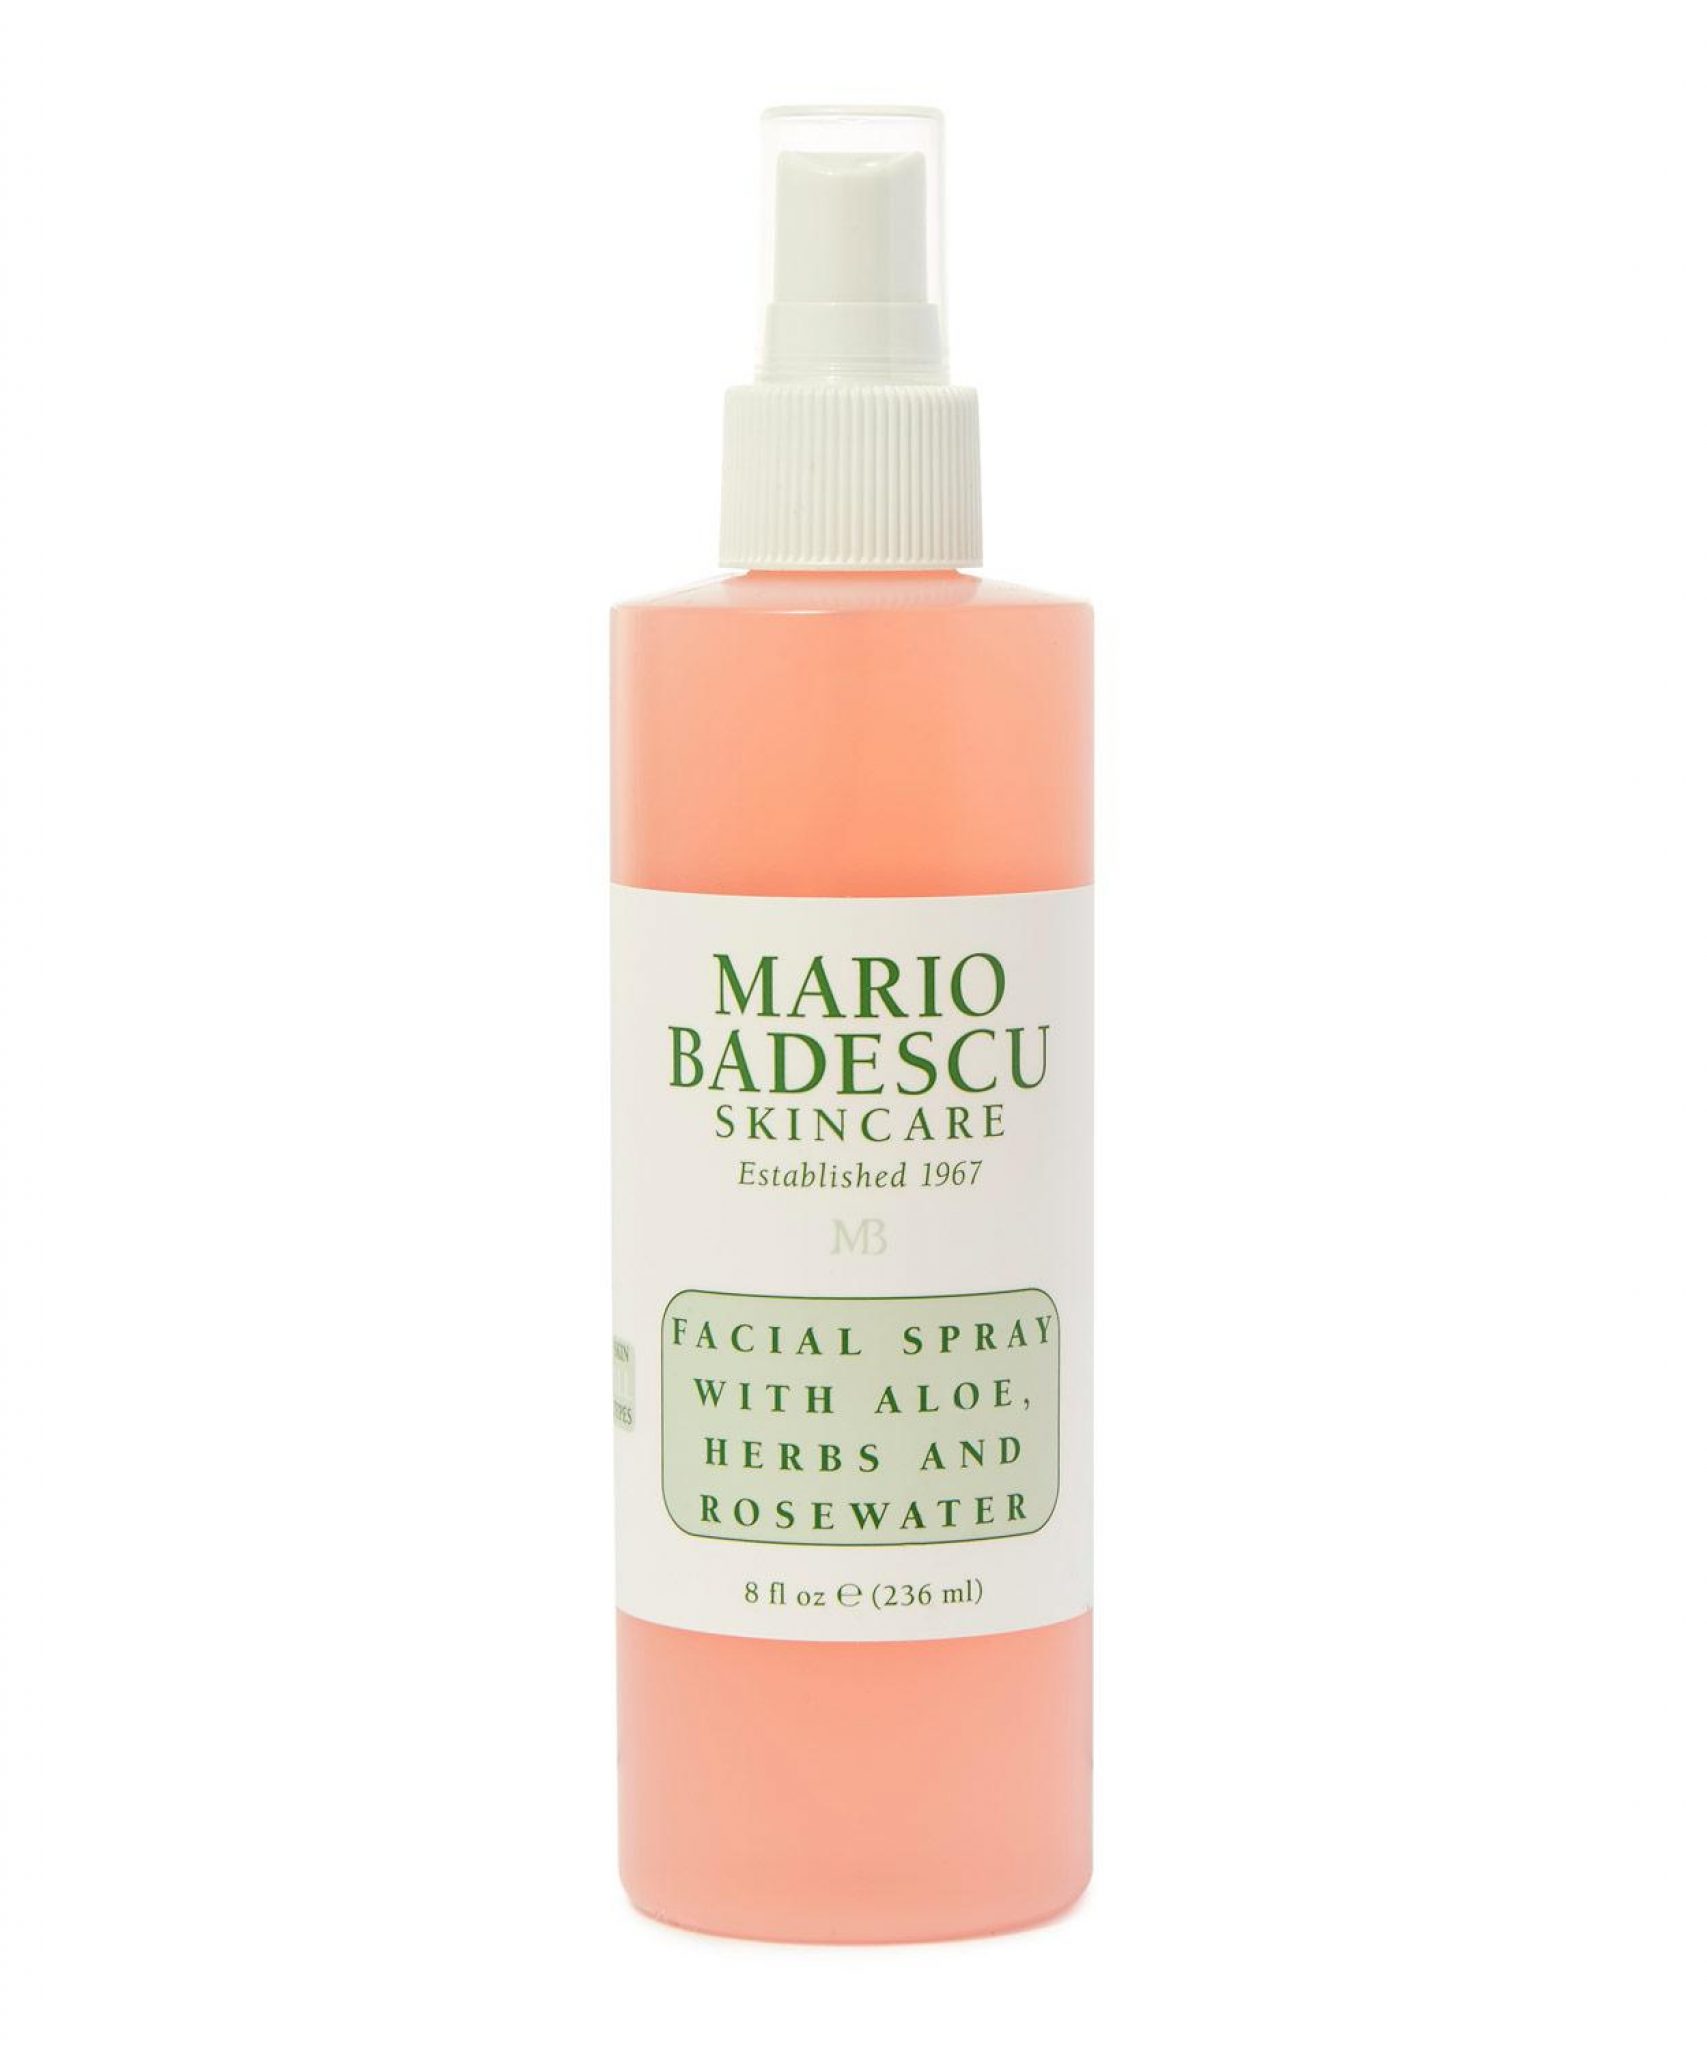 Facial Spray with Aloe Herbs and Rosewater - Mario Badescu bewertung